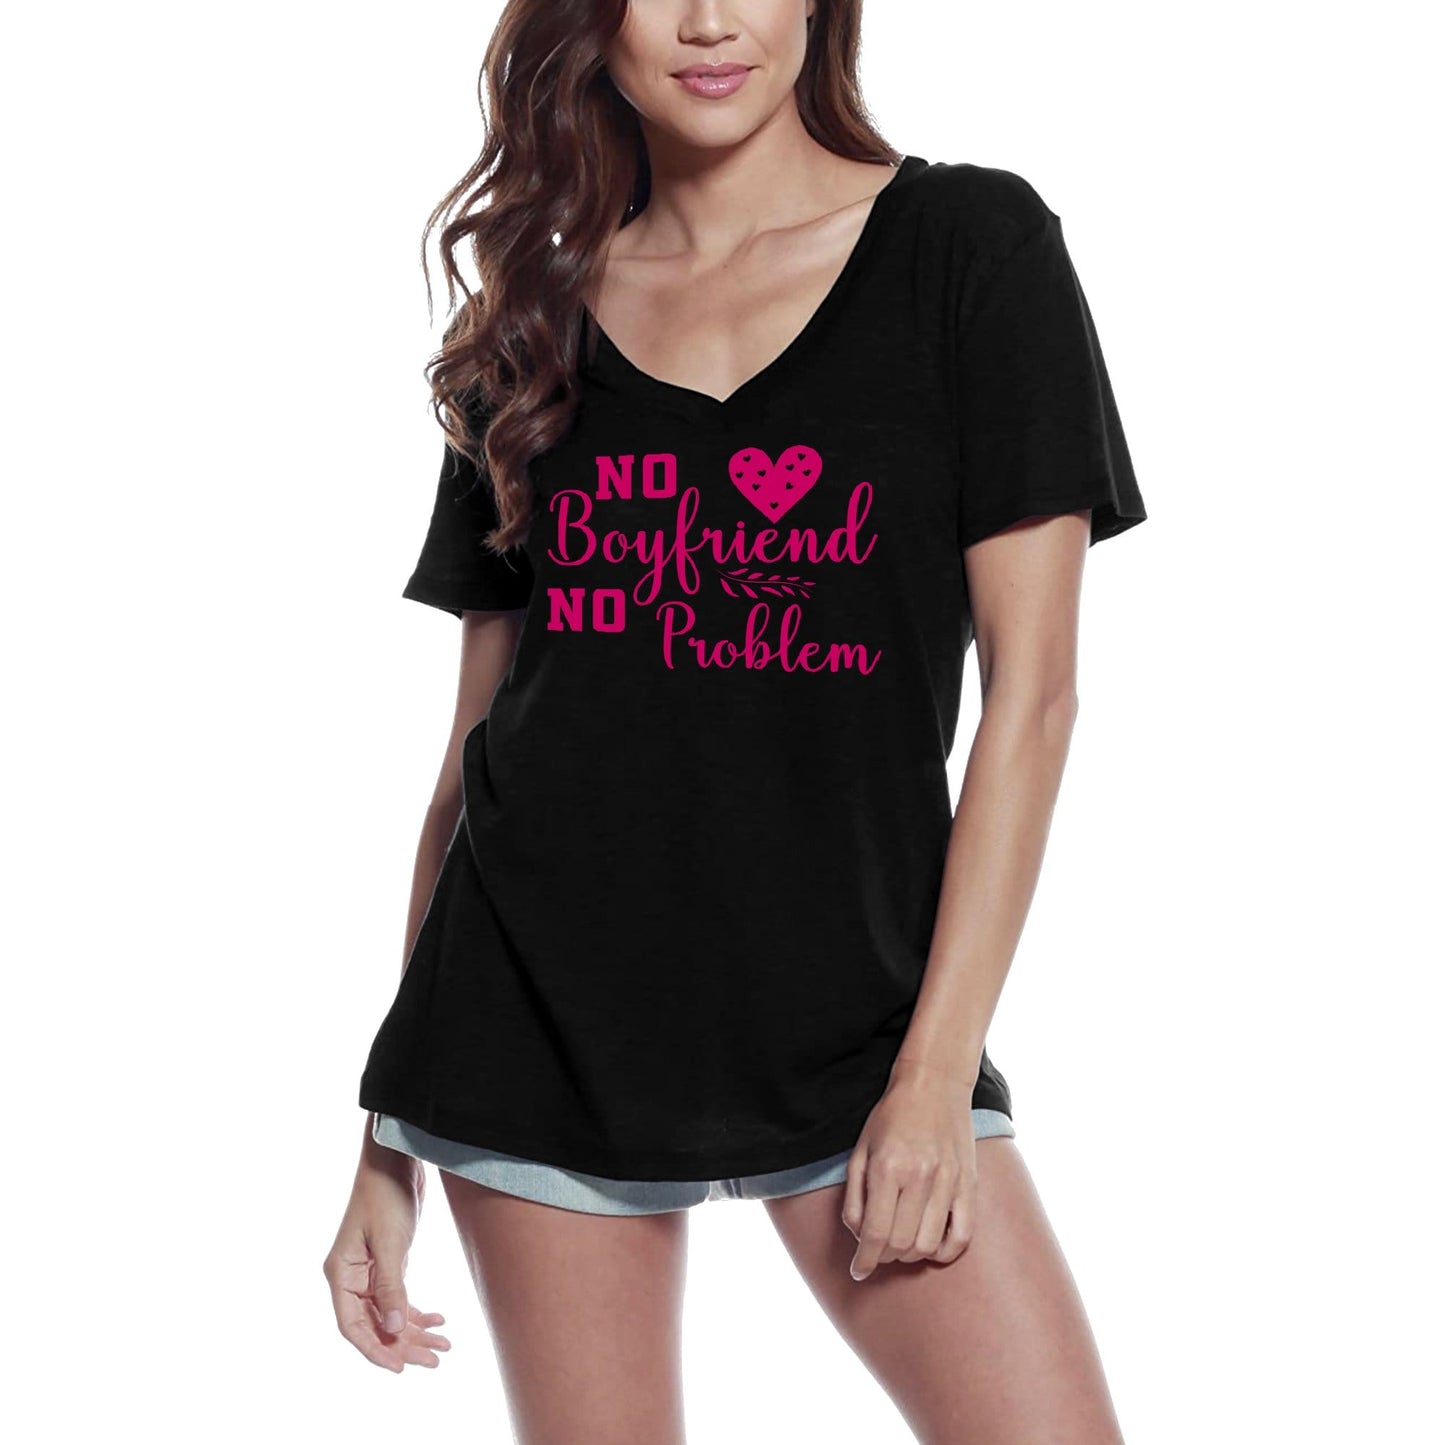 ULTRABASIC Women's T-Shirt No Boyfriend No Problem - Funny Humor Tee Shirt Gift Tops